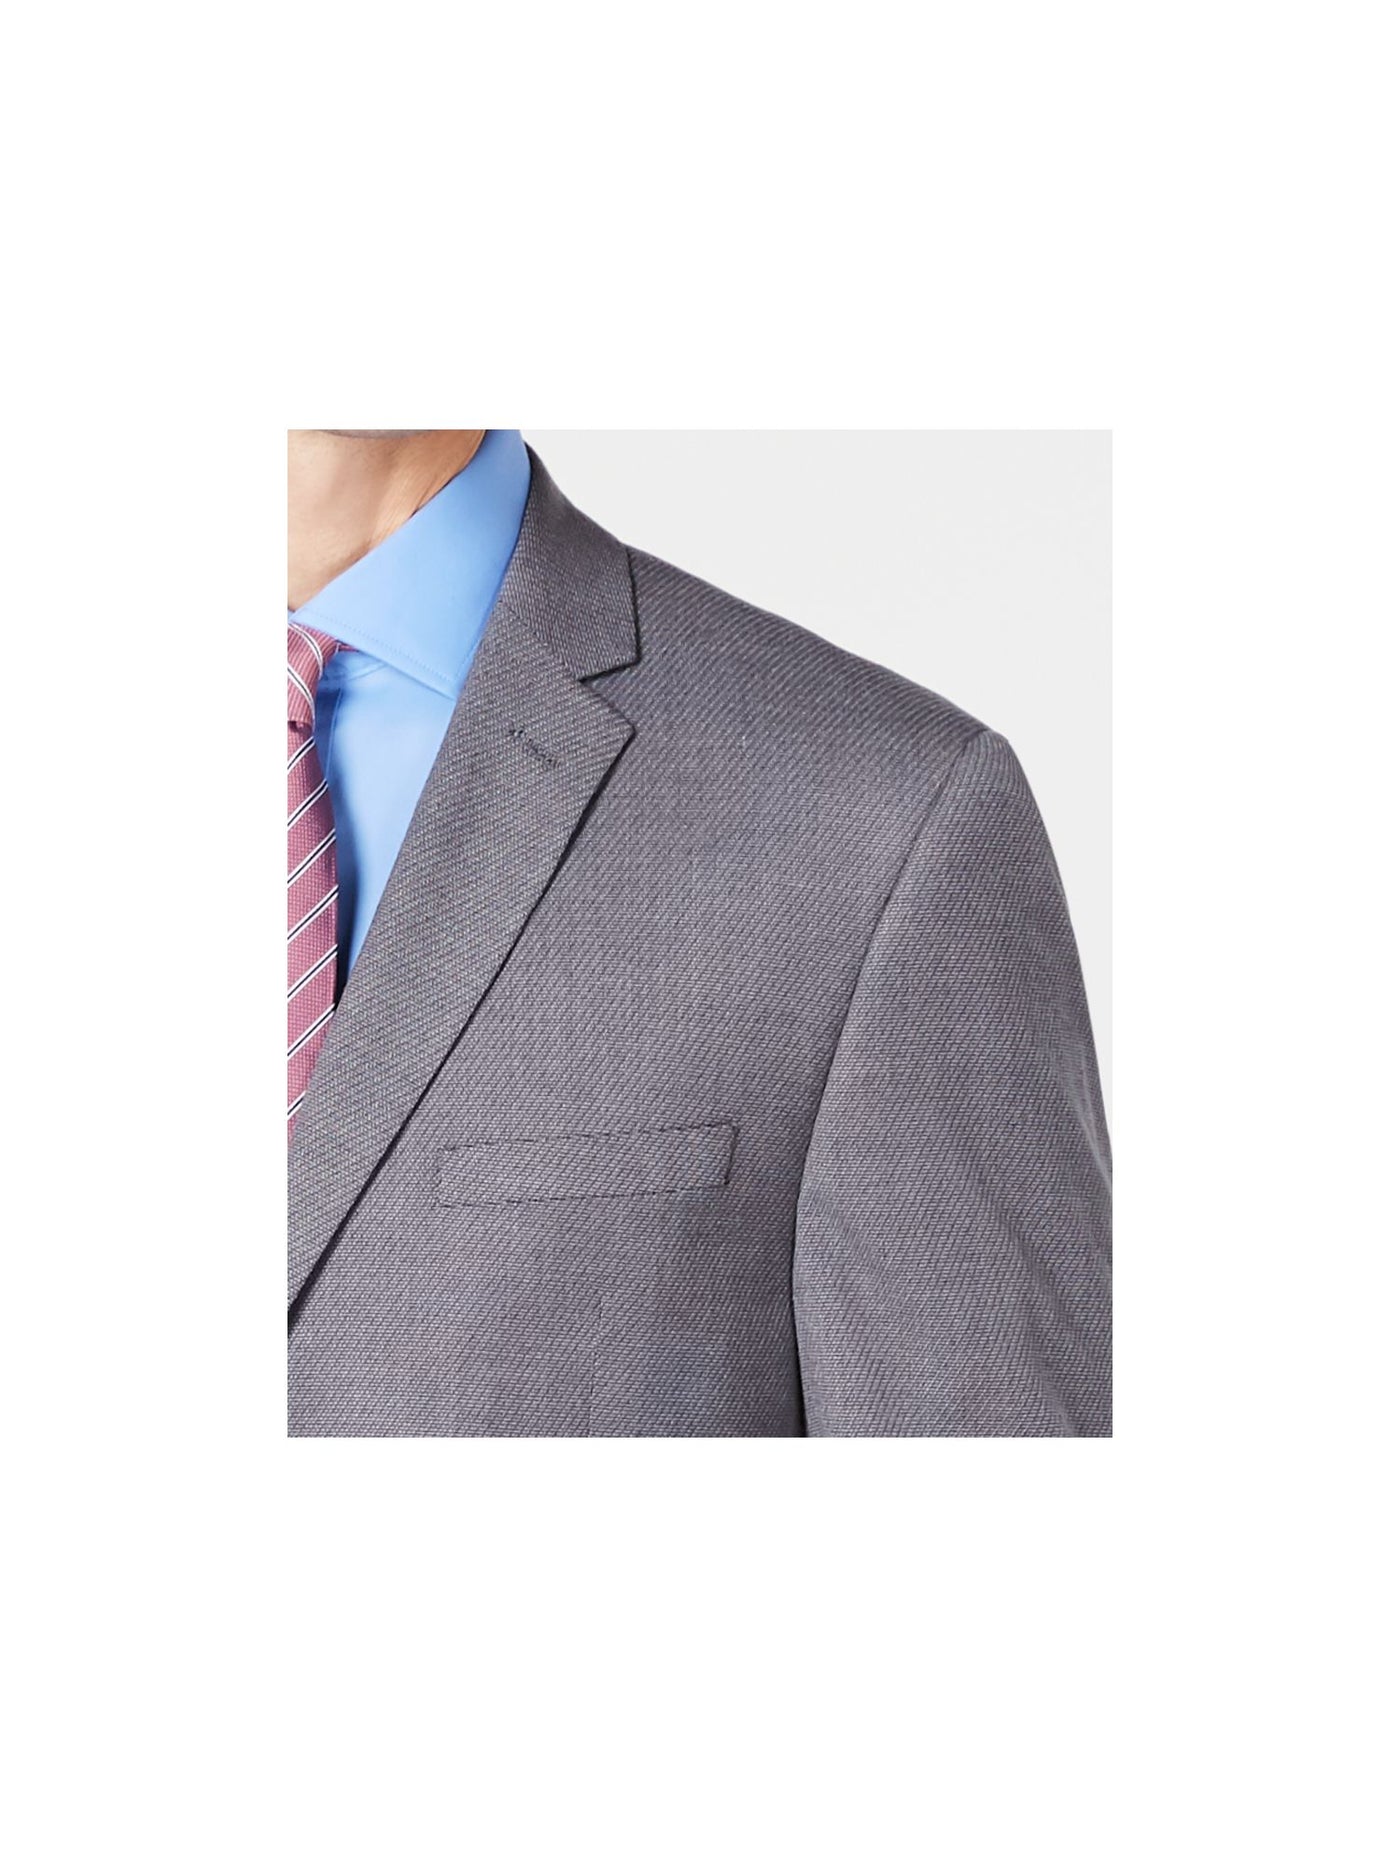 VINCE CAMUTO Mens Gray Single Breasted, Stretch, Slim Fit Wrinkle Resistant Suit Separate Blazer Jacket 38 SHORT